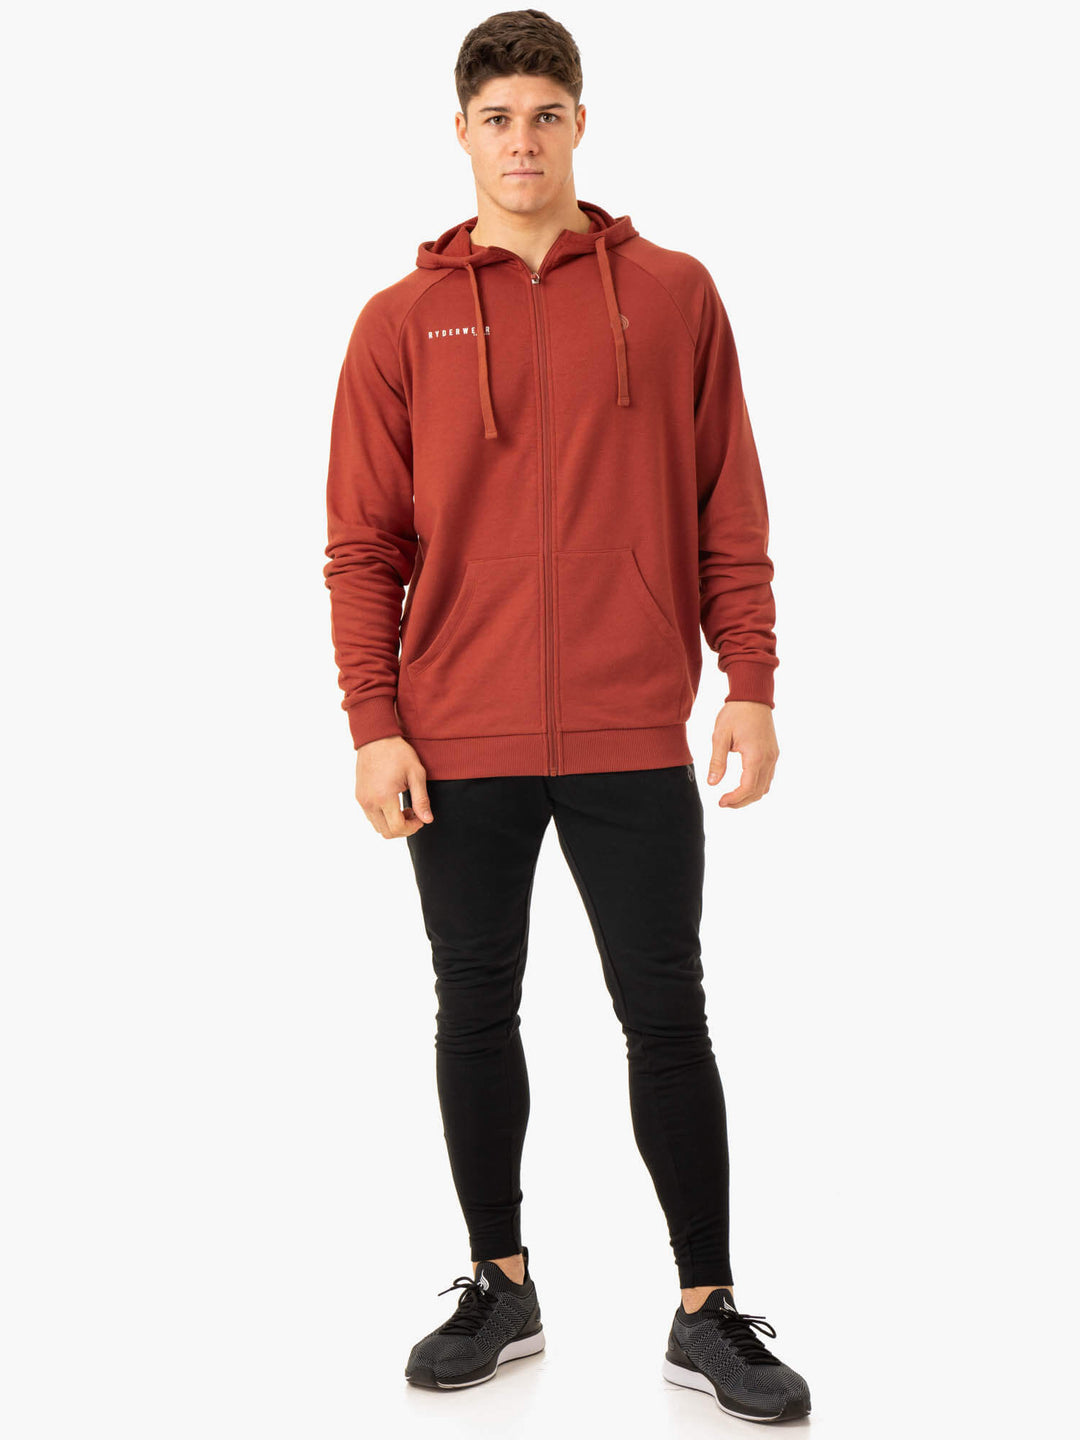 Pursuit Zip Up Hoodie - Red Clay Clothing Ryderwear 